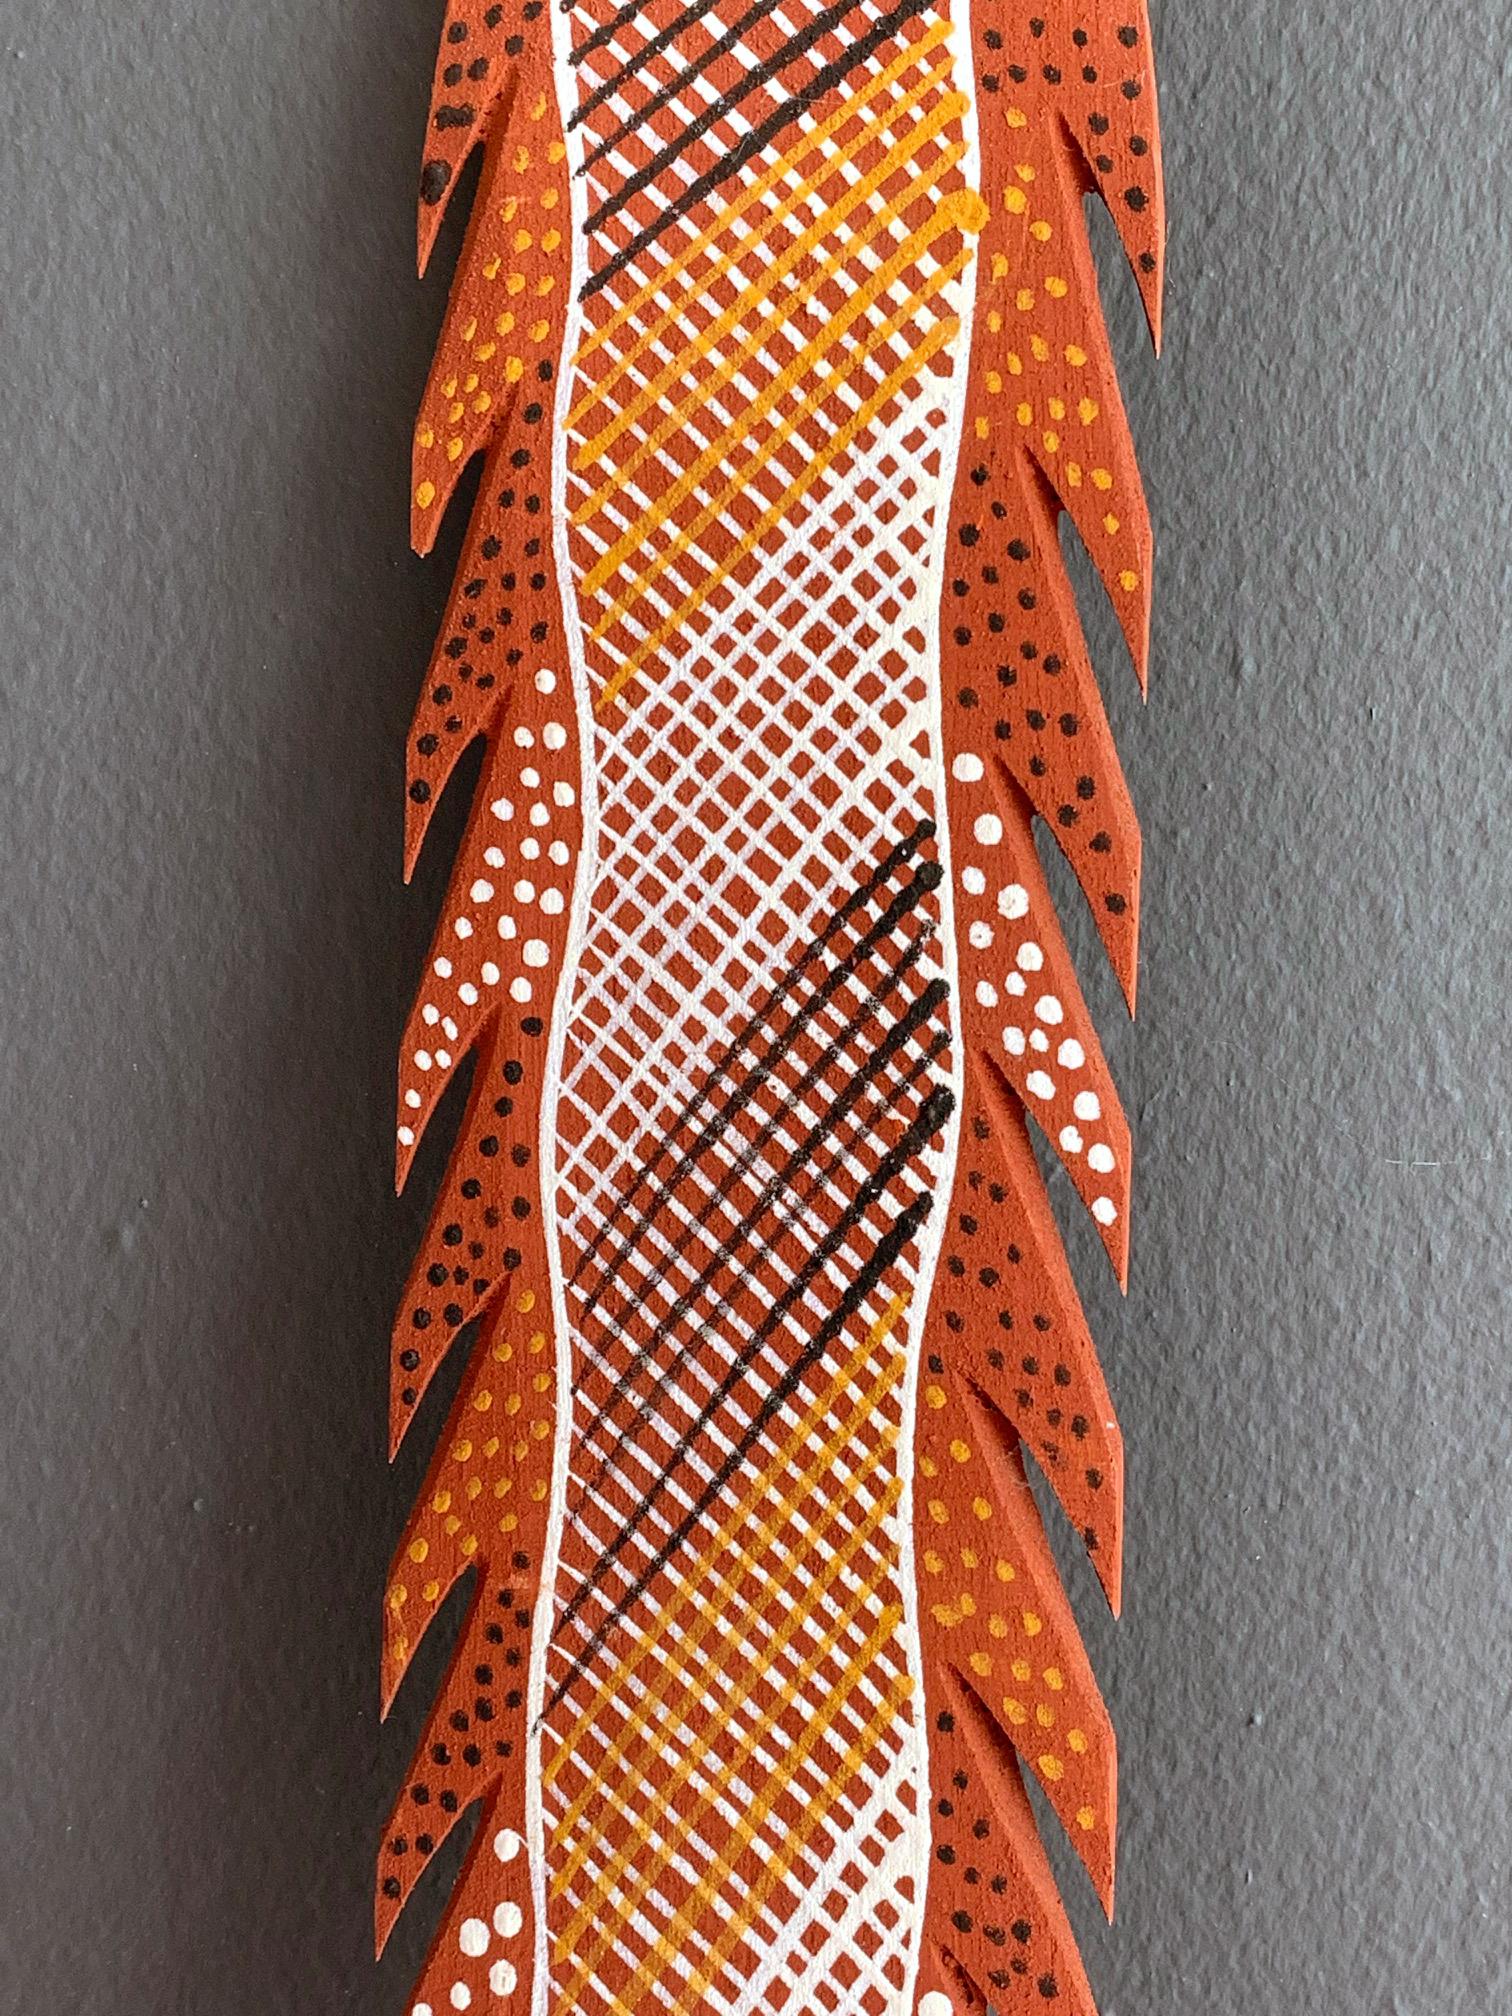 aboriginal spear for sale